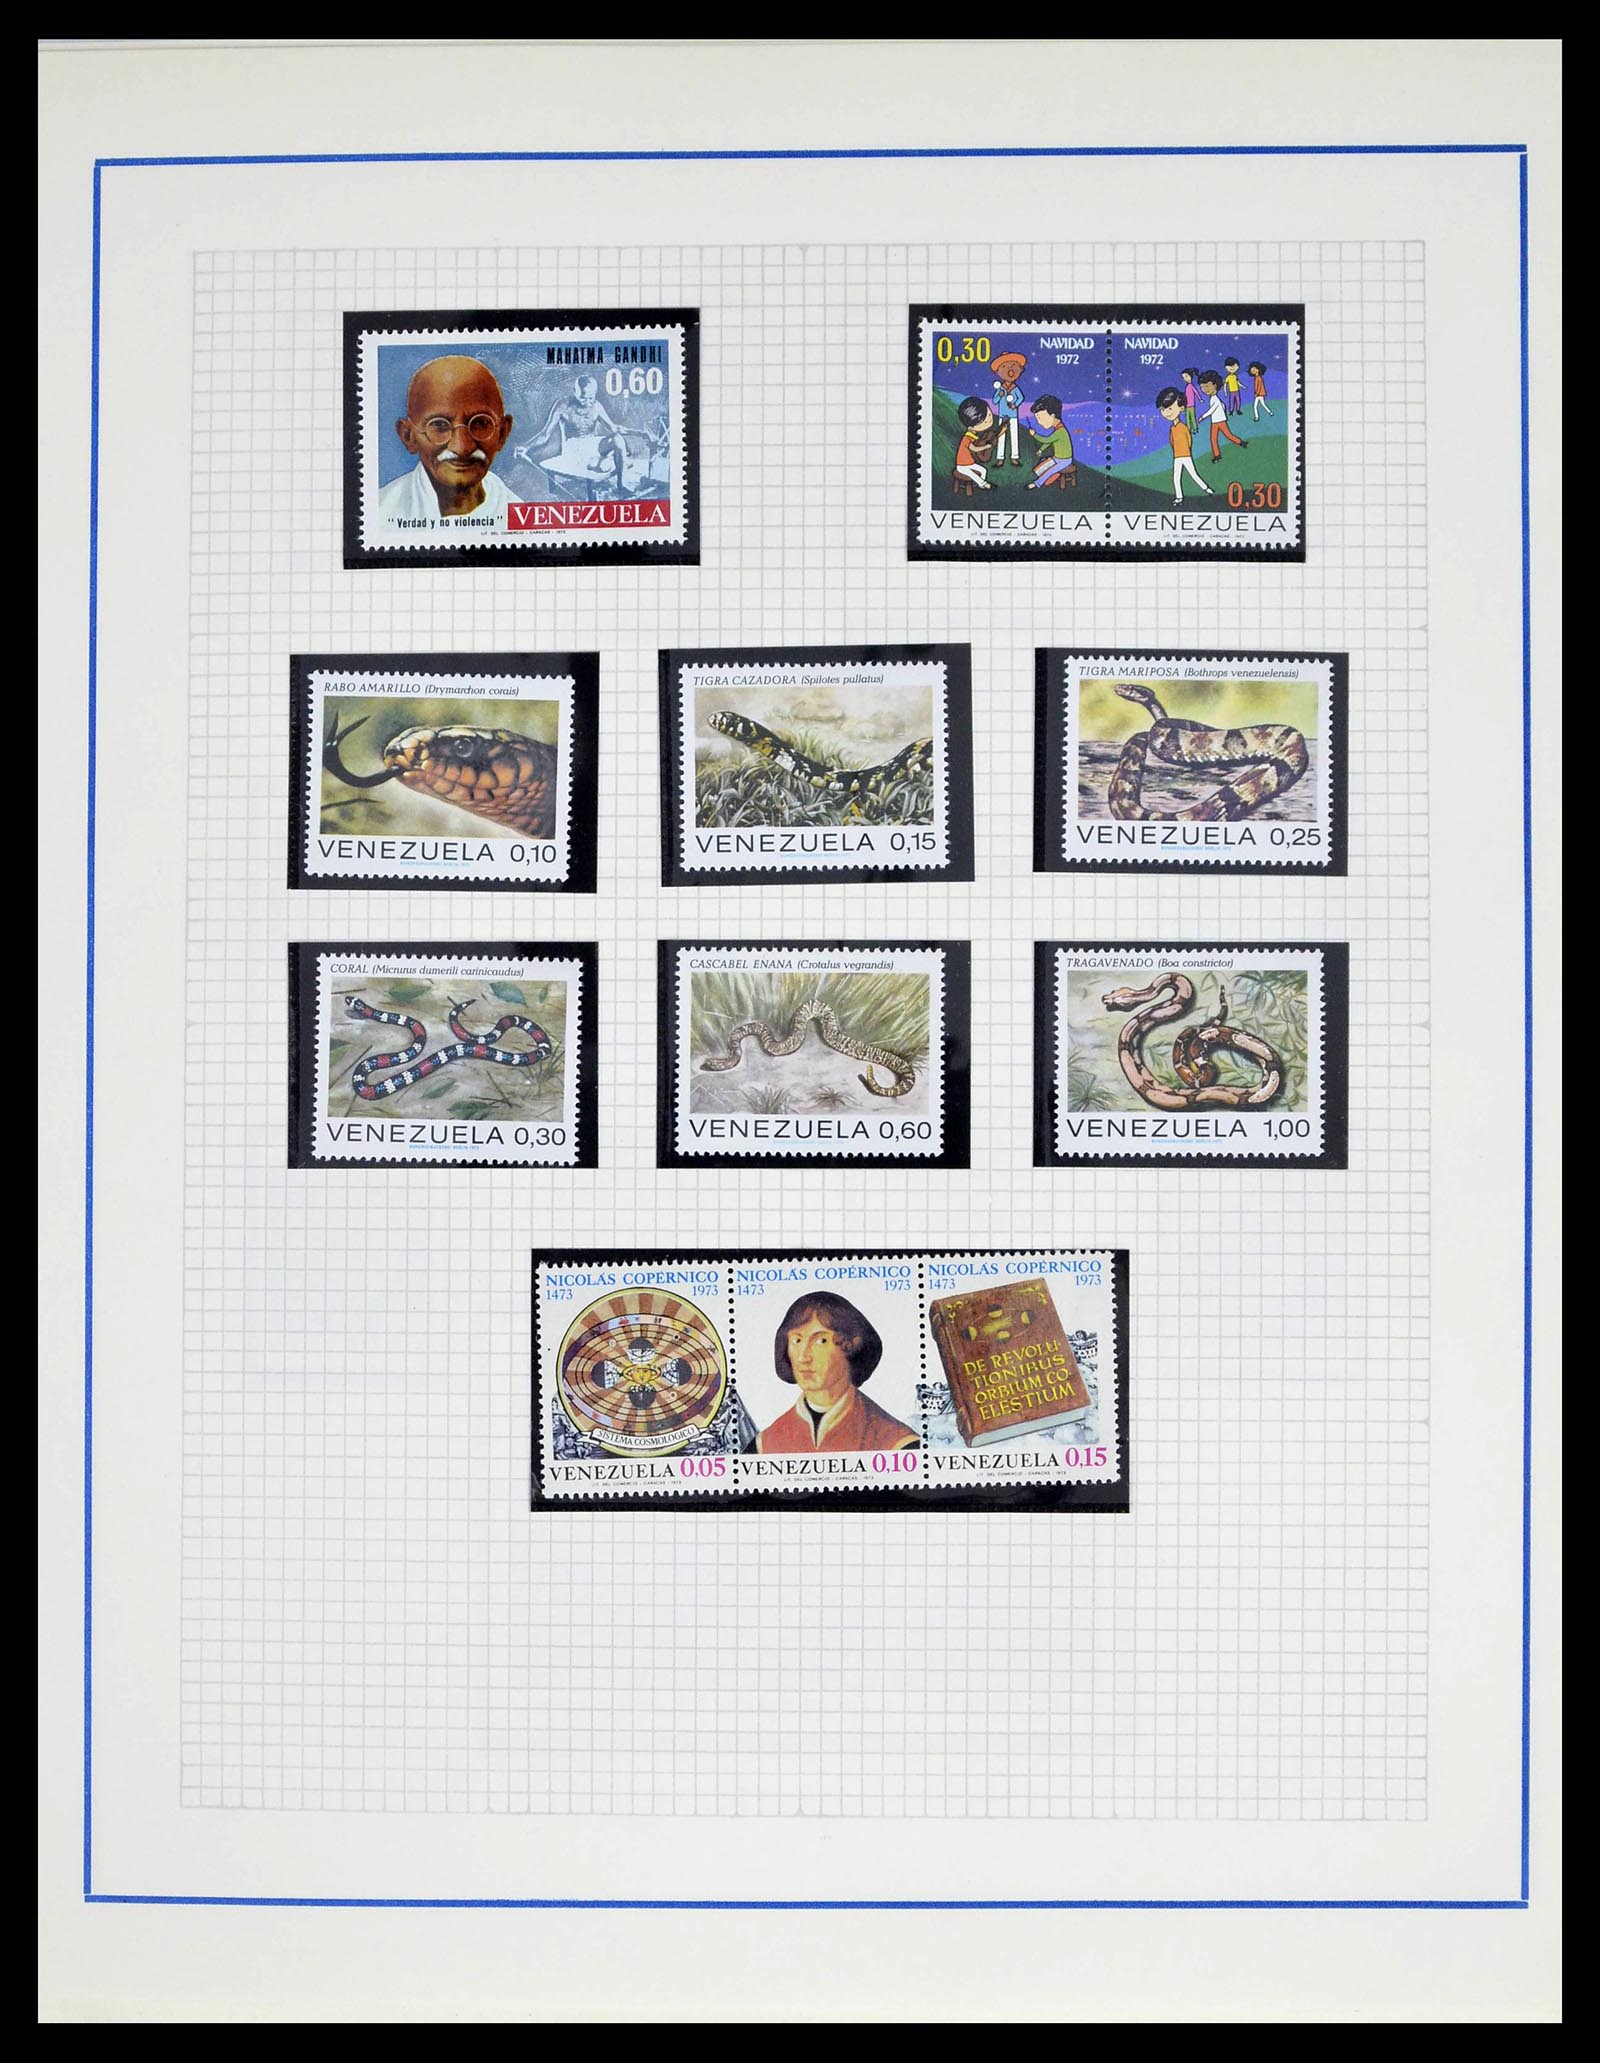 39223 0061 - Stamp collection 39223 Venezuela 1859-1984.